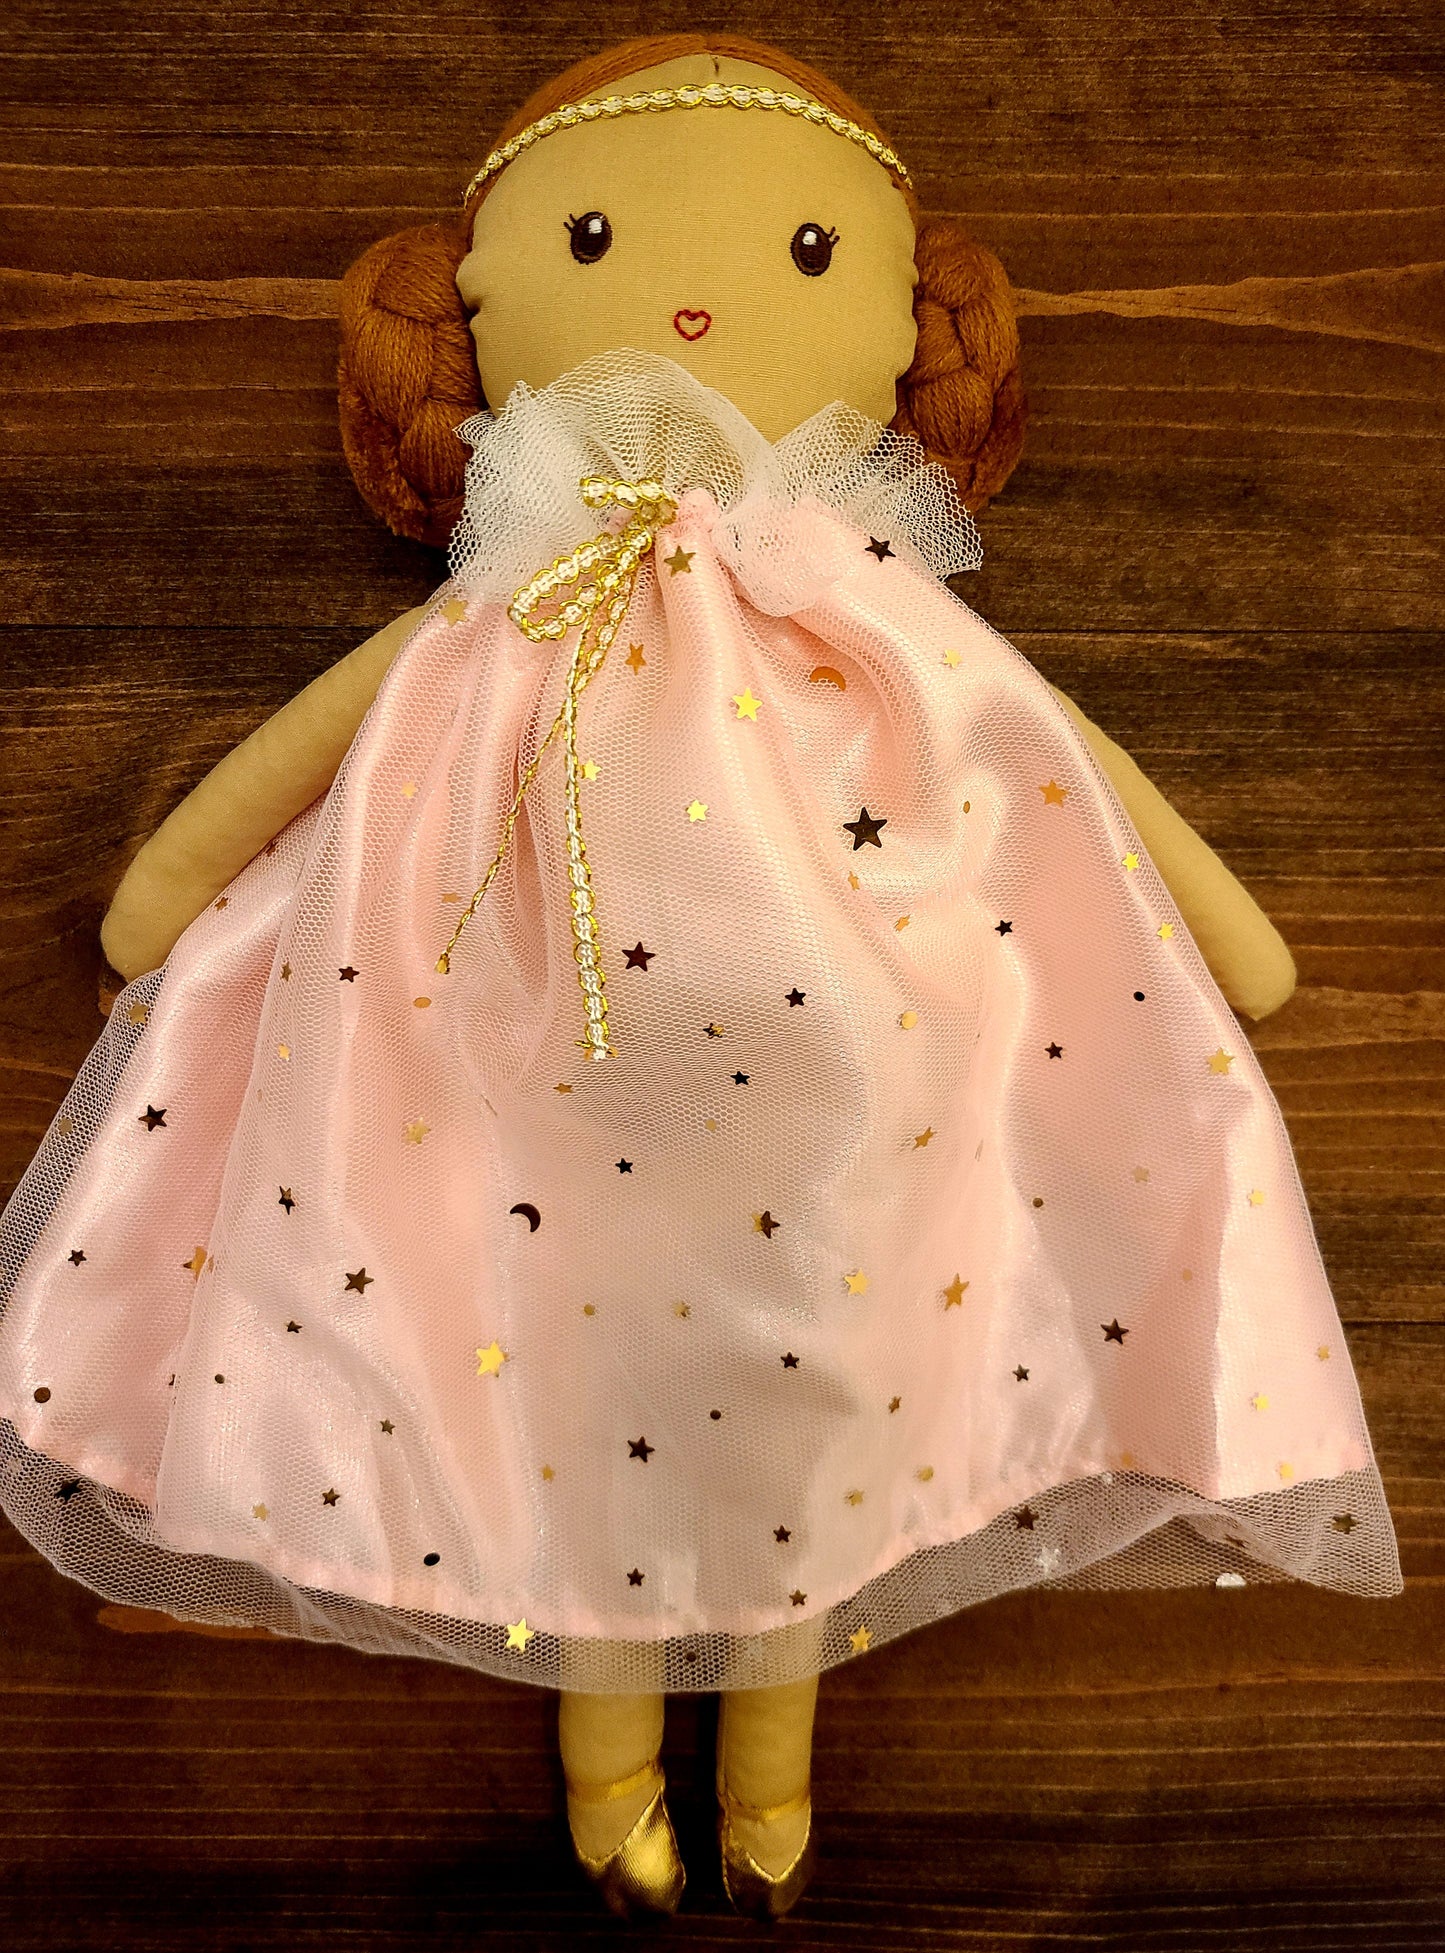 Personalized Soft Rag 13in Tan Skin Baby Girl Ballerina Dressing Dolls Plush Toy/ Decorative Plush Doll/ Handmade Baby Gift Toy